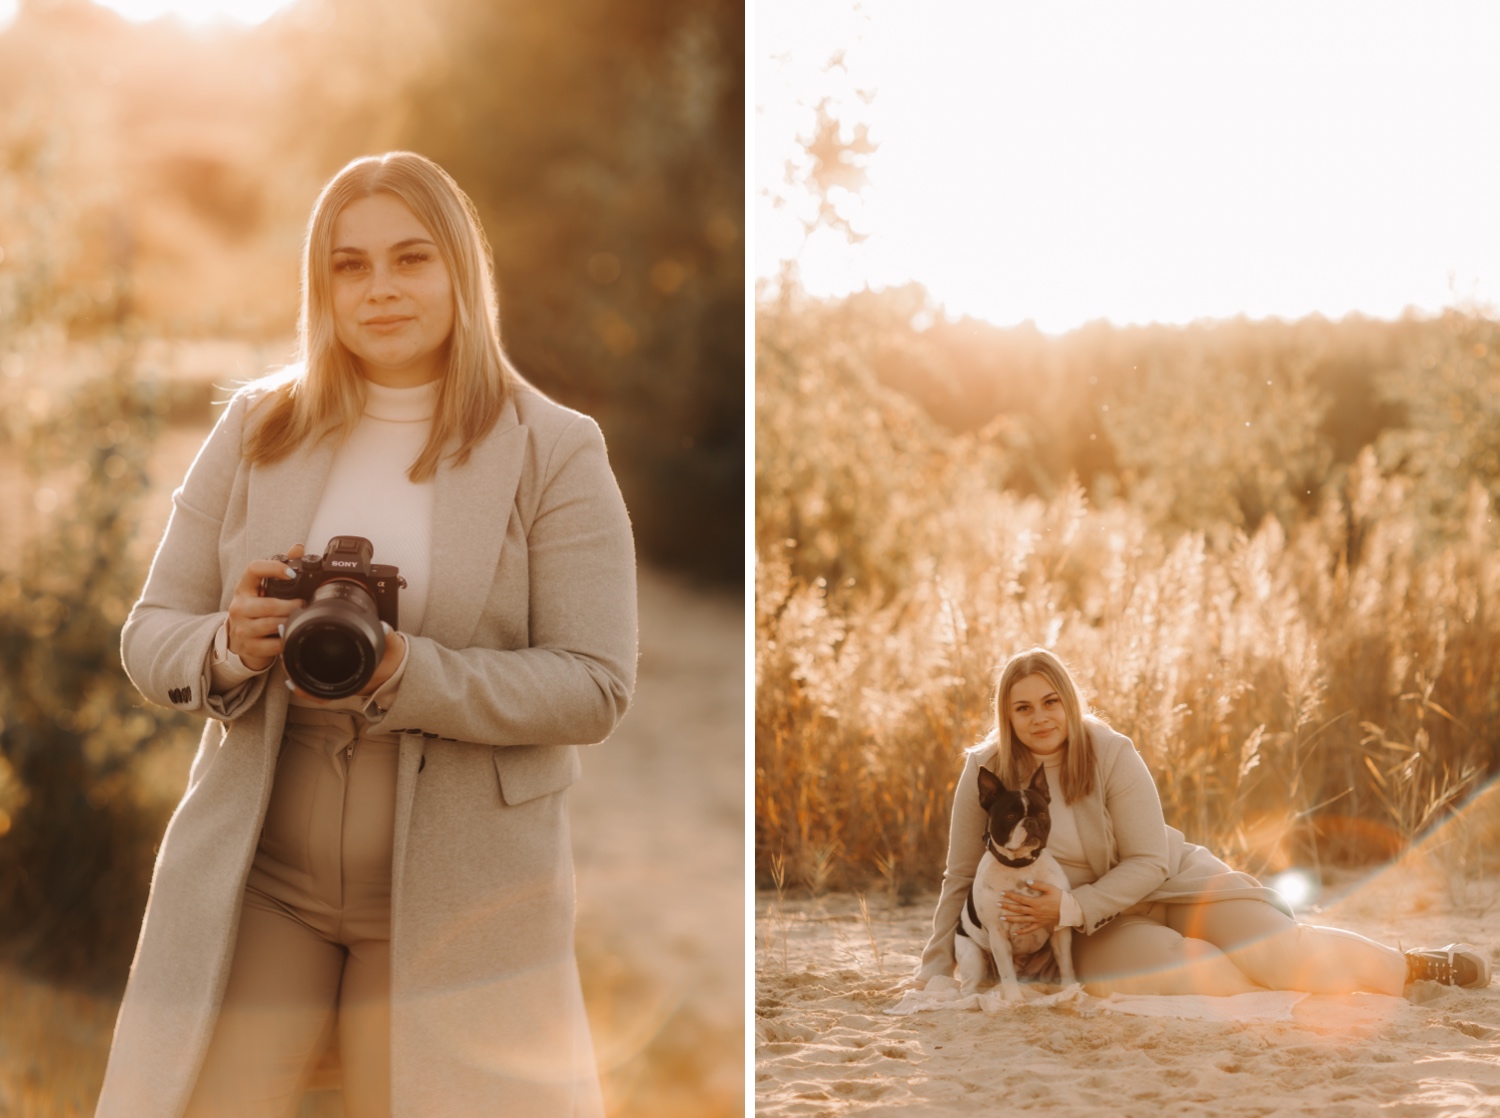 businessfotograaf limburg - Nederlandse fotografe poseert met haar camera in de Lommelse sahara